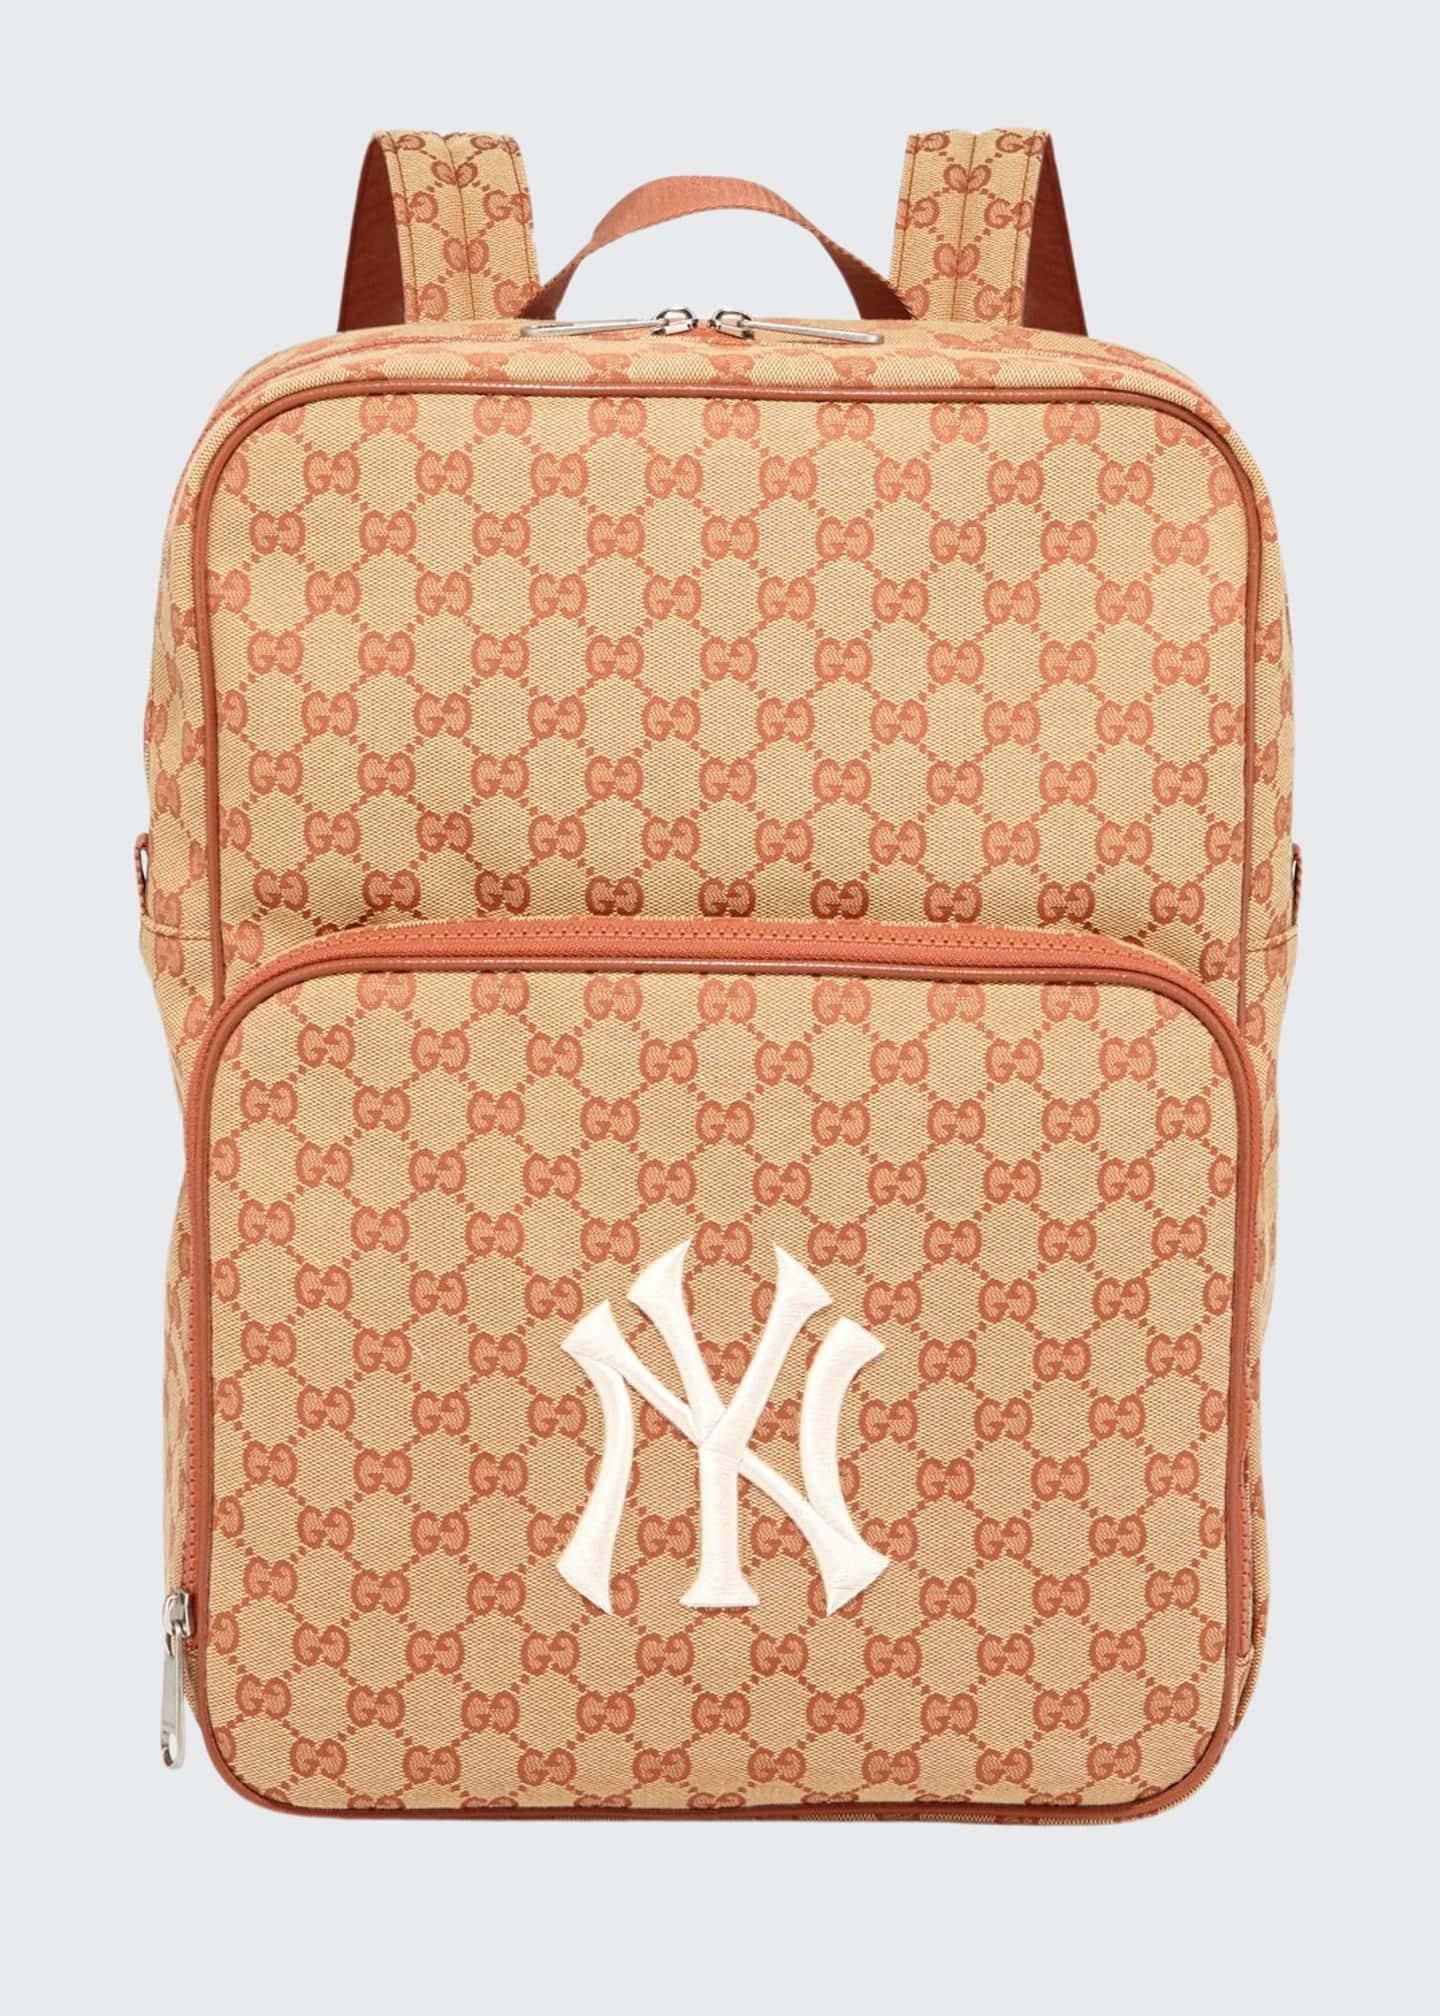 GUCCI Medium NY Yankees GG Canvas Backpack Bag Beige 536724